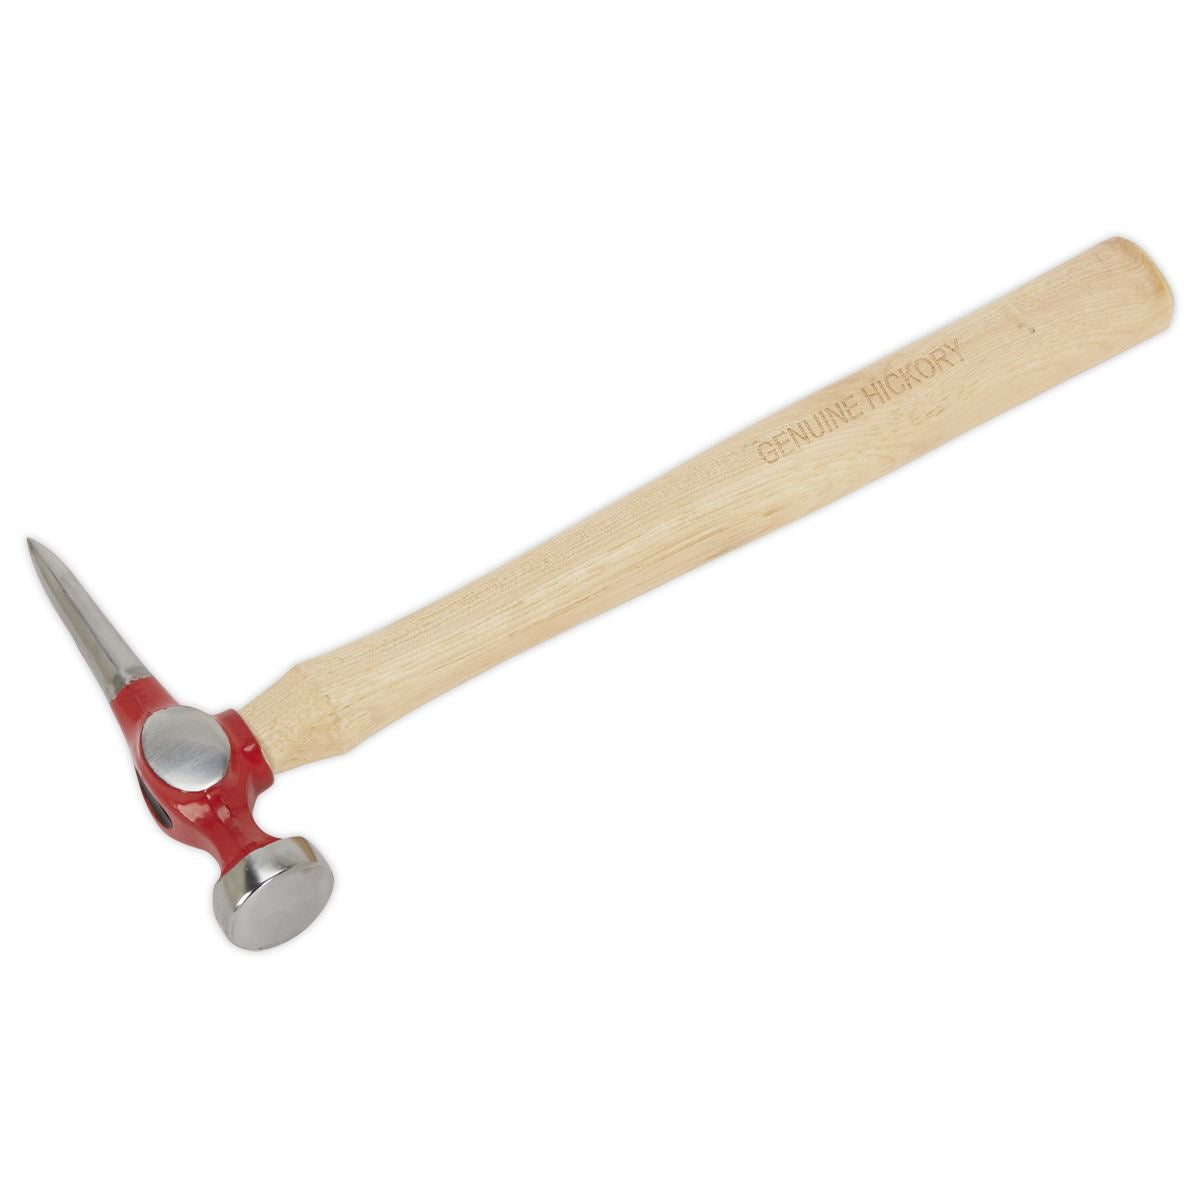 Sealey Pick & Finish Hammer